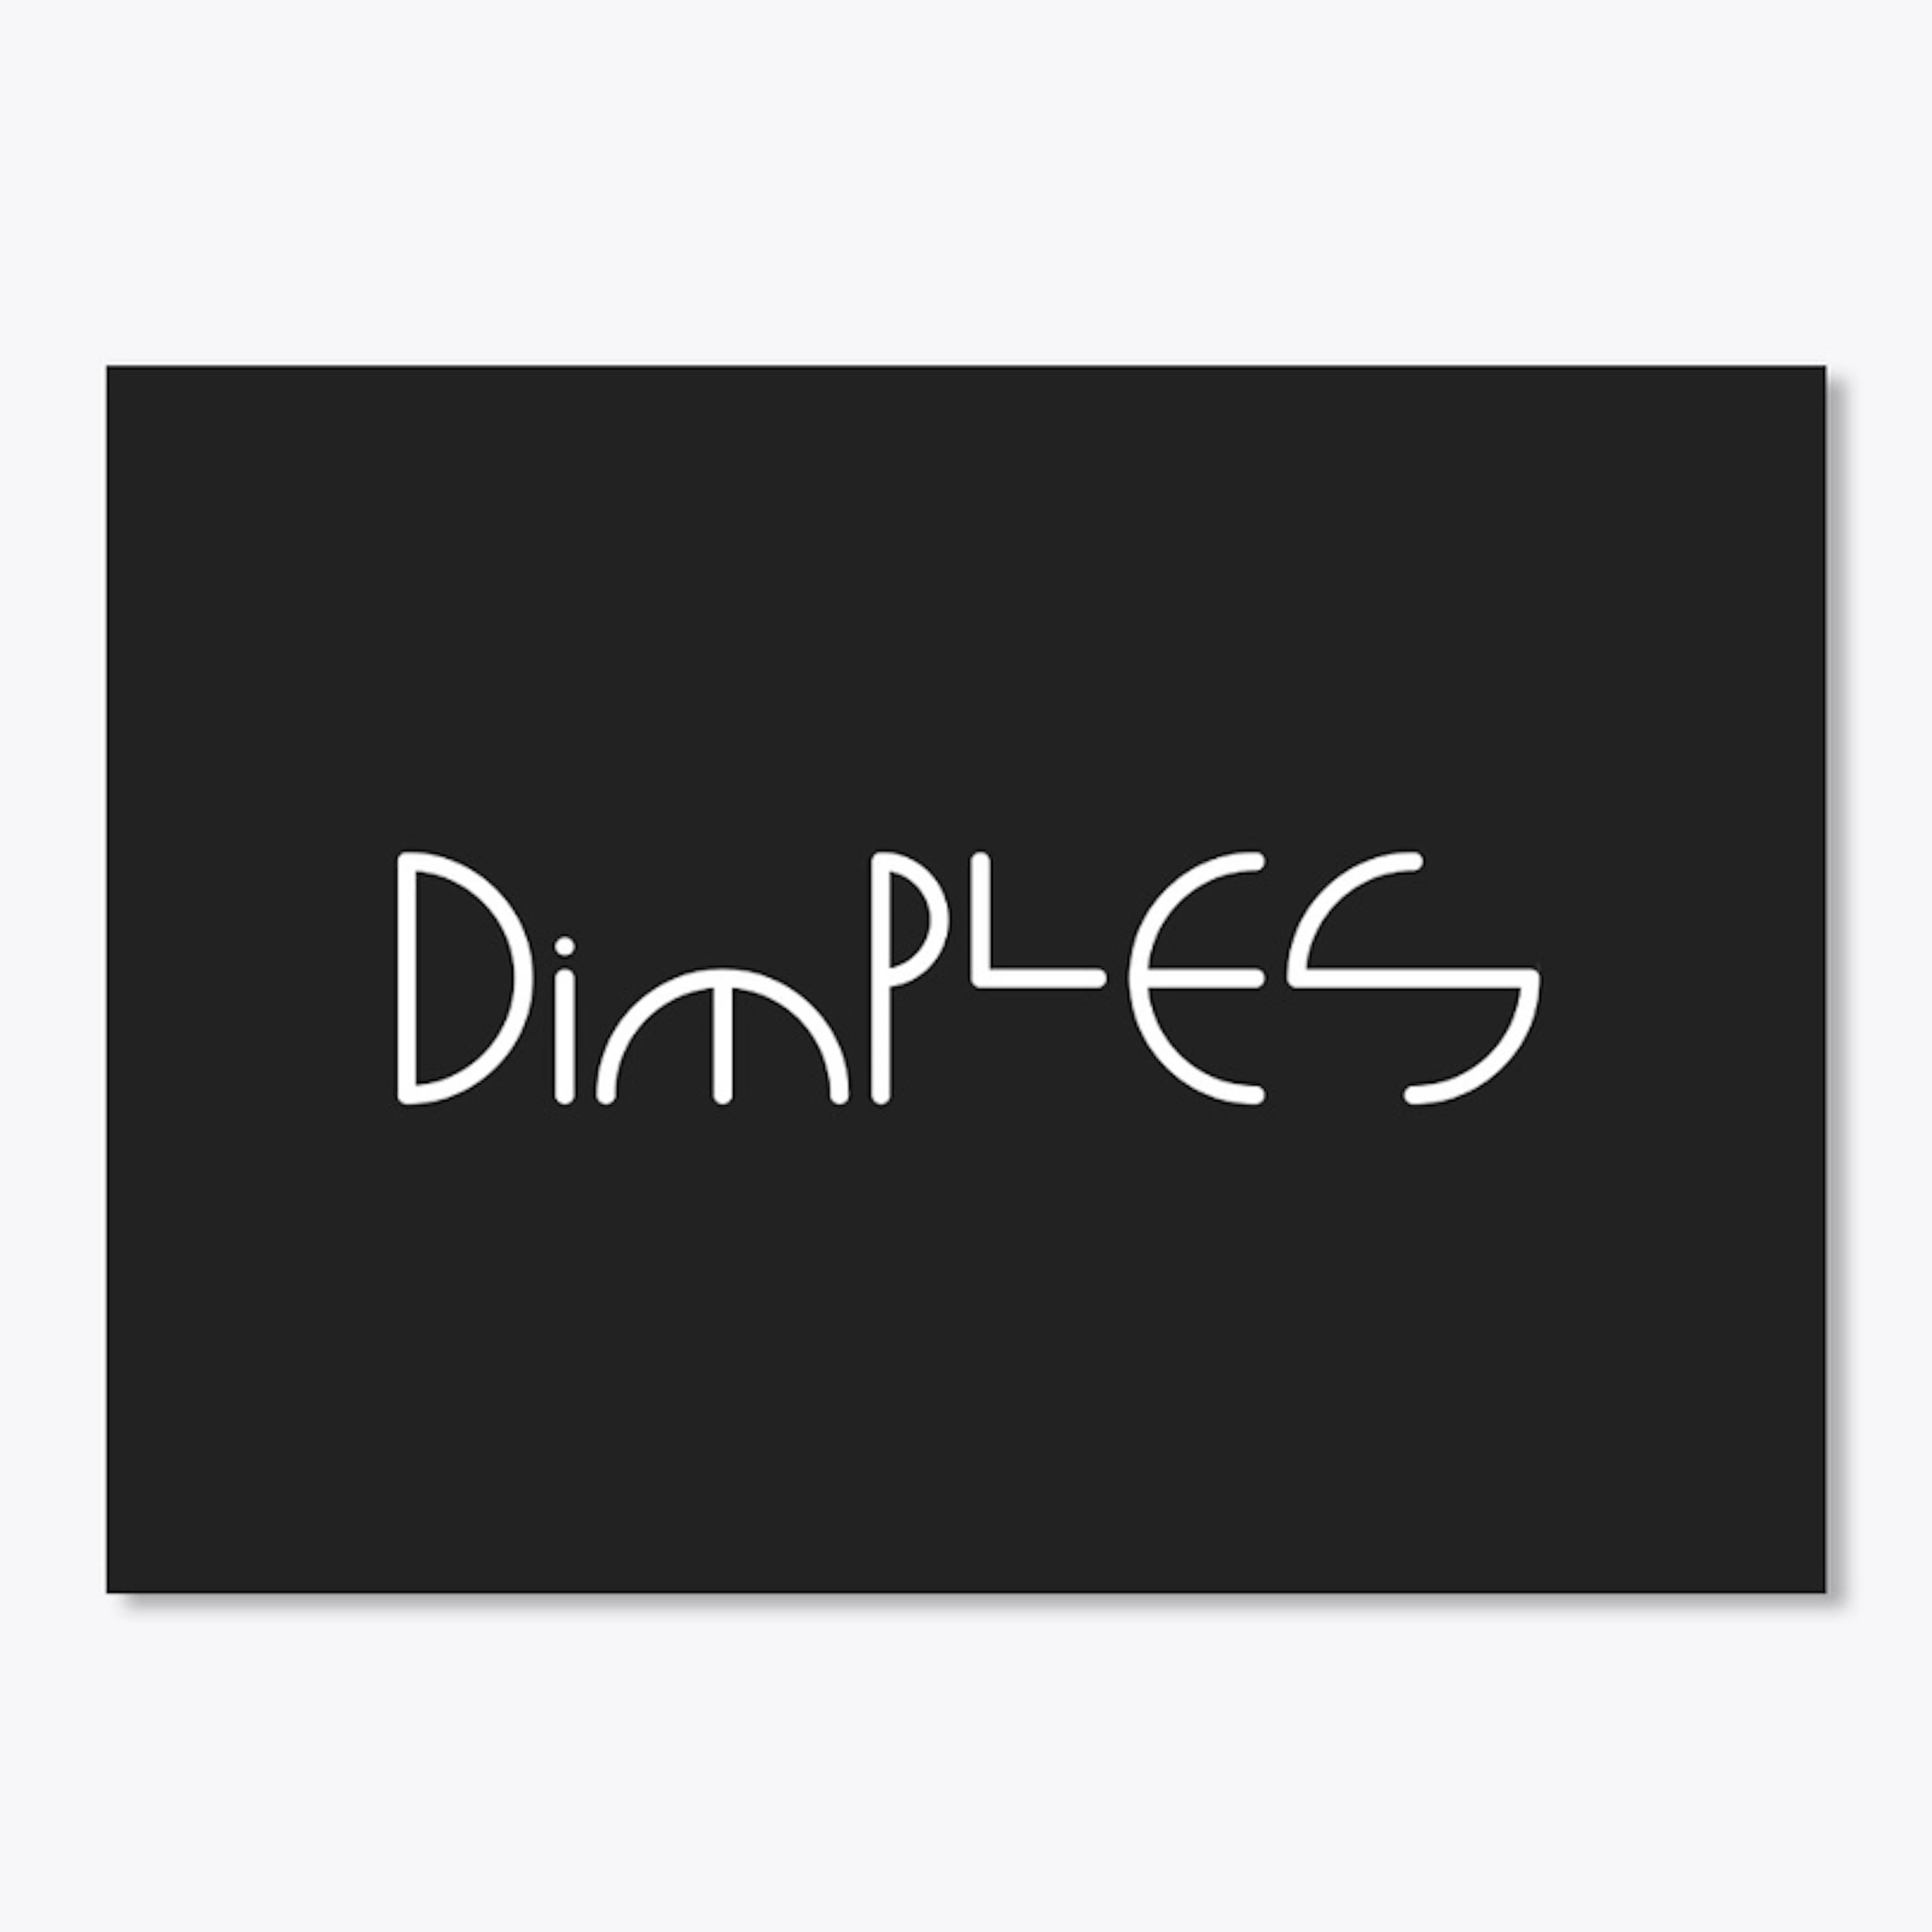 Designer Dimples